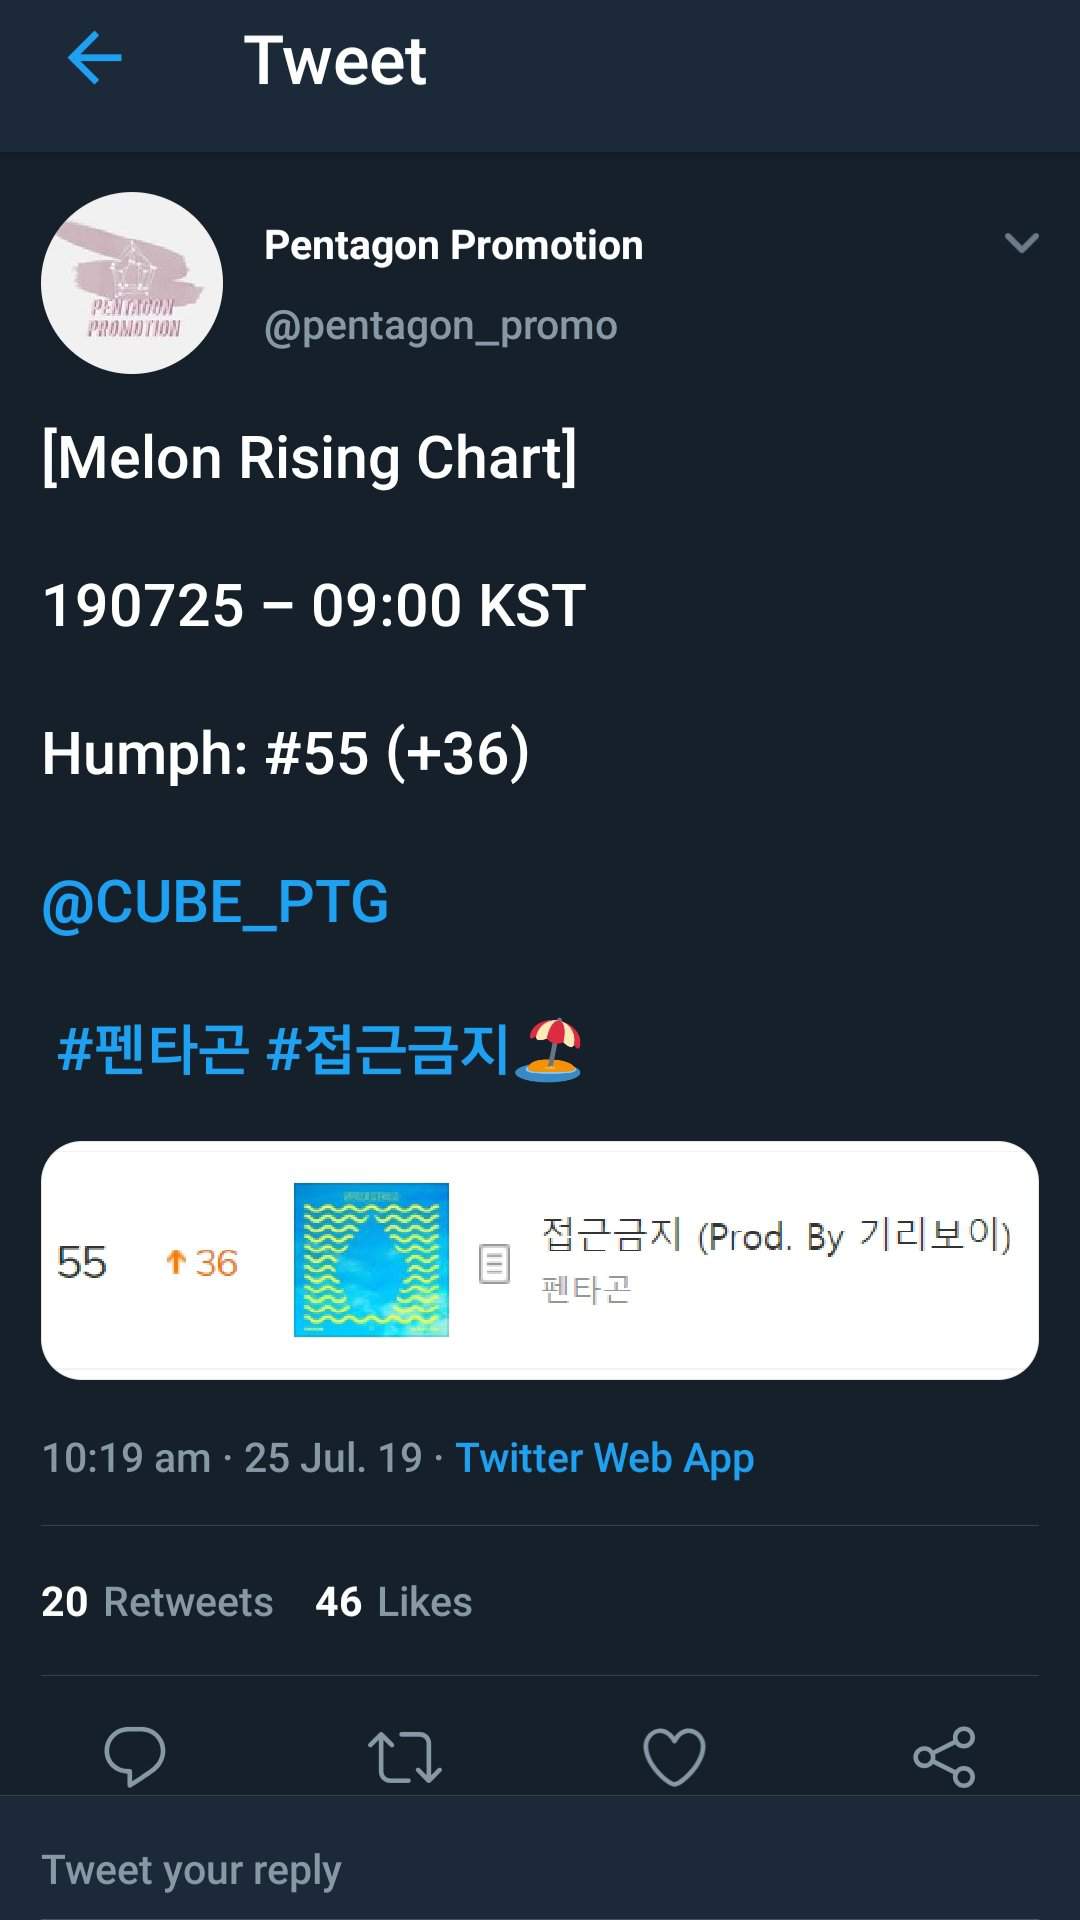 Melon Rising Chart